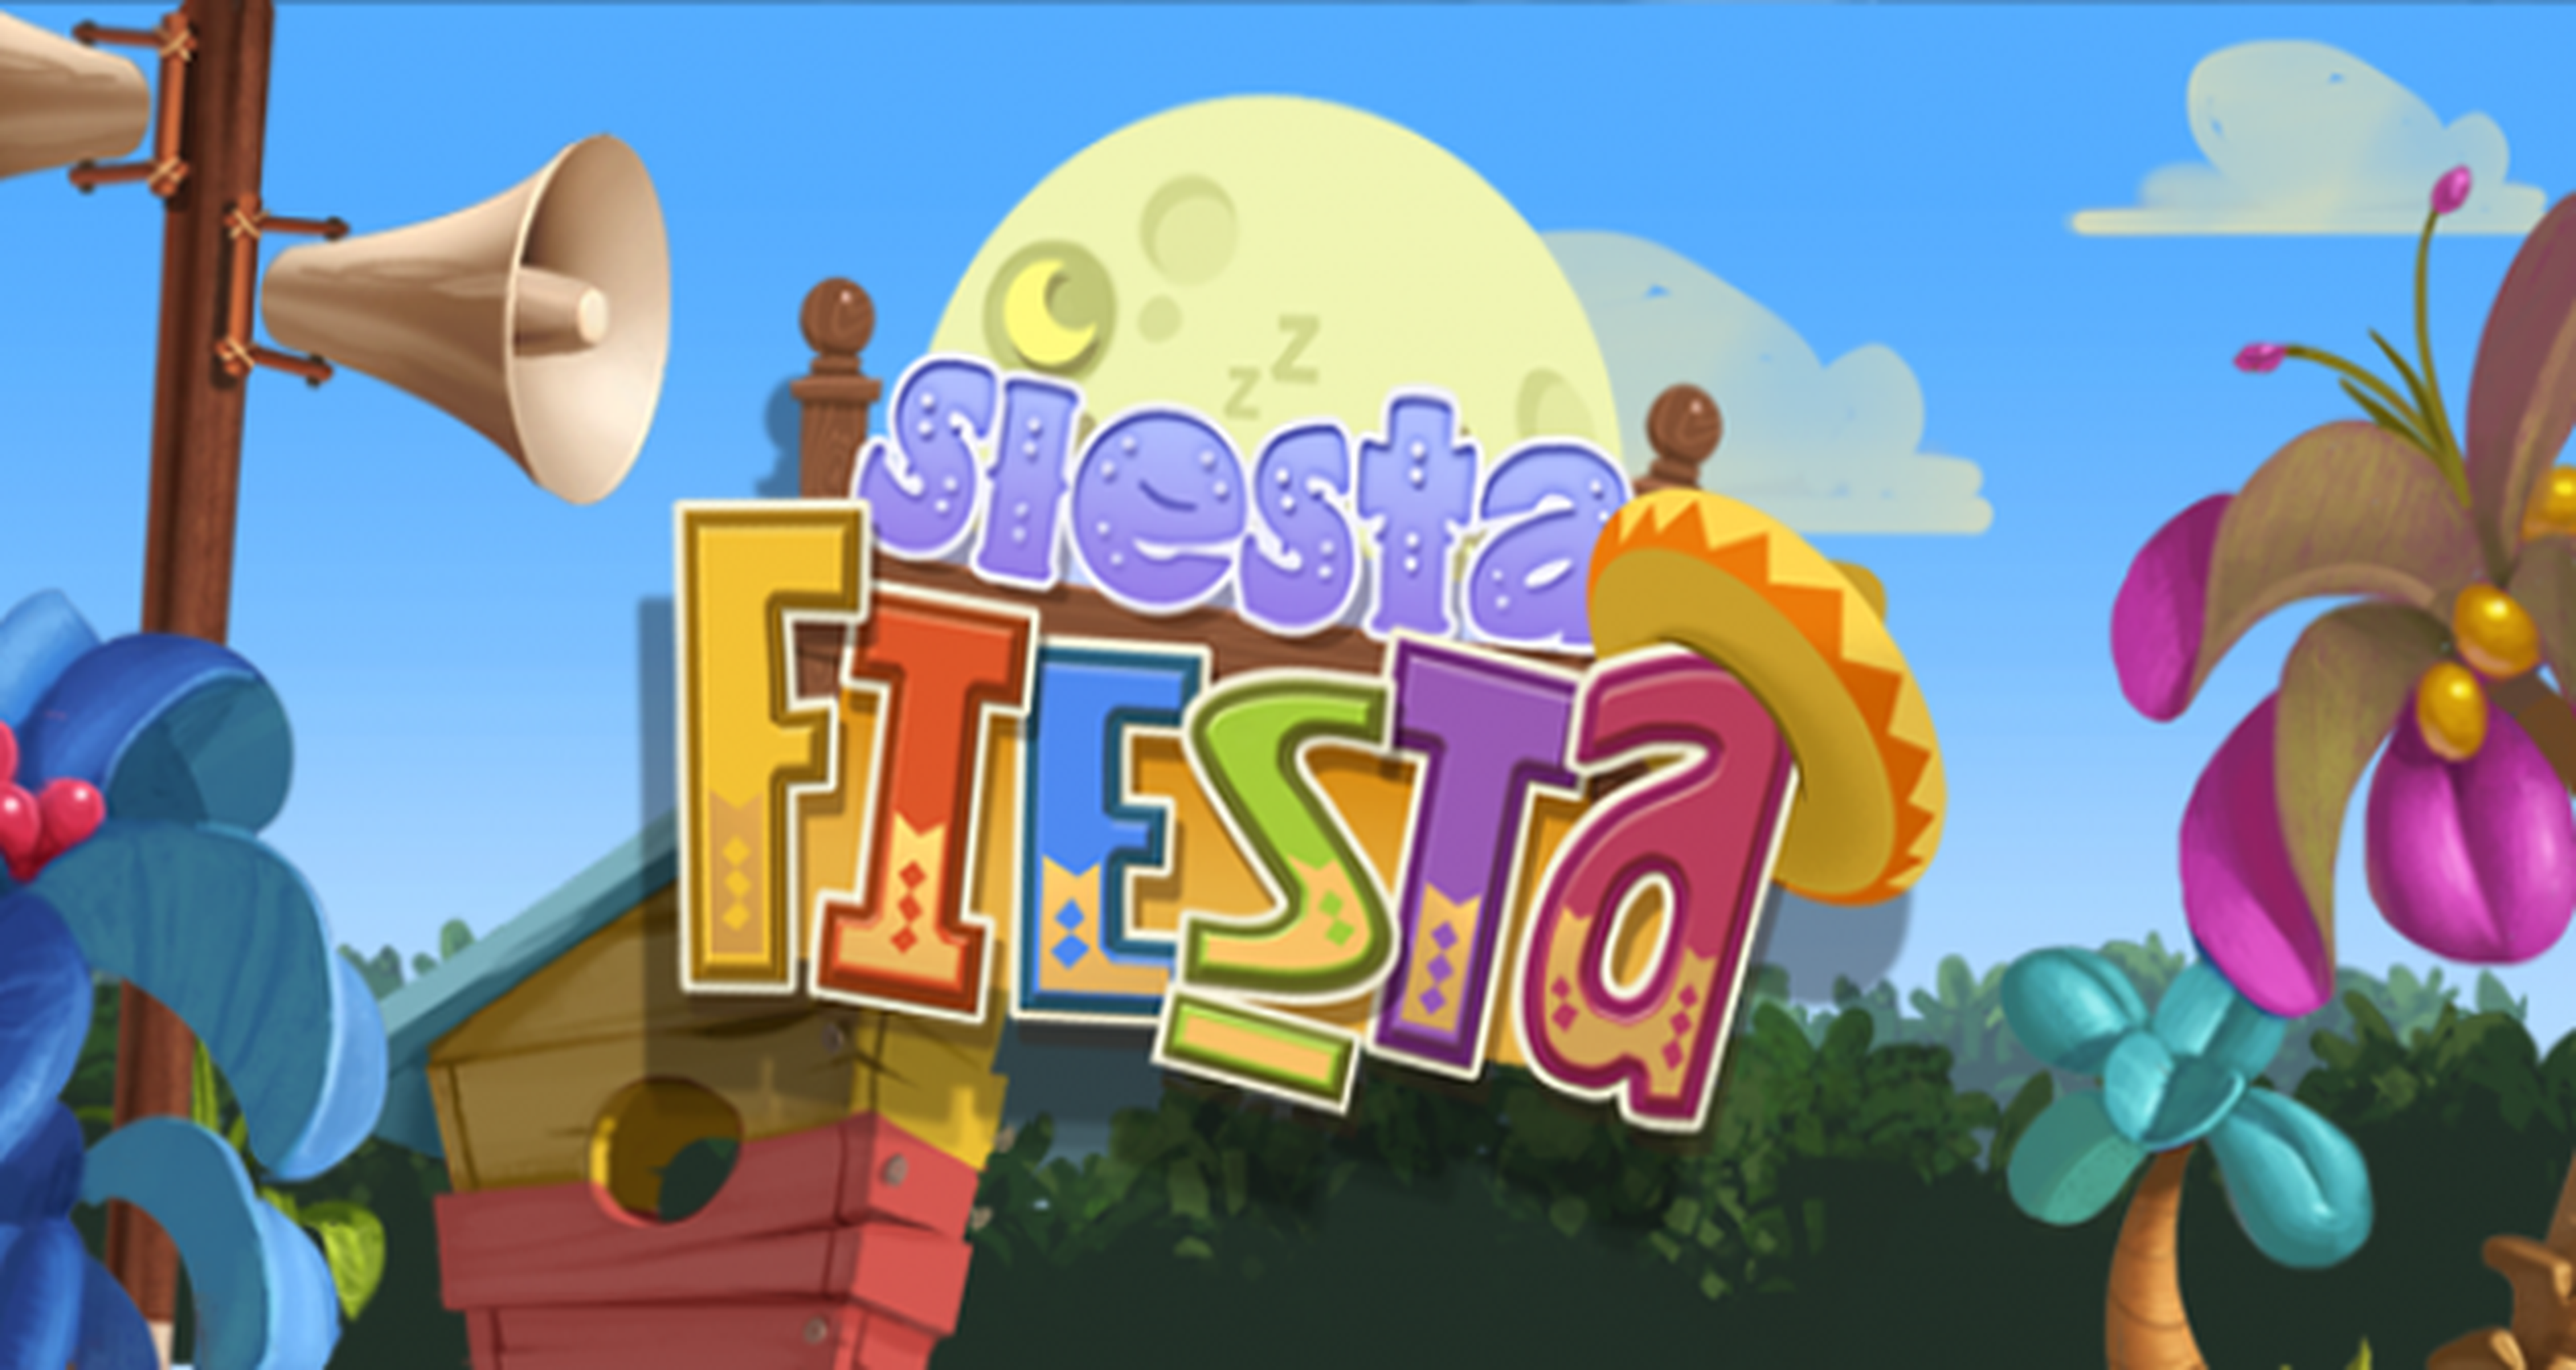 Análisis de Siesta Fiesta